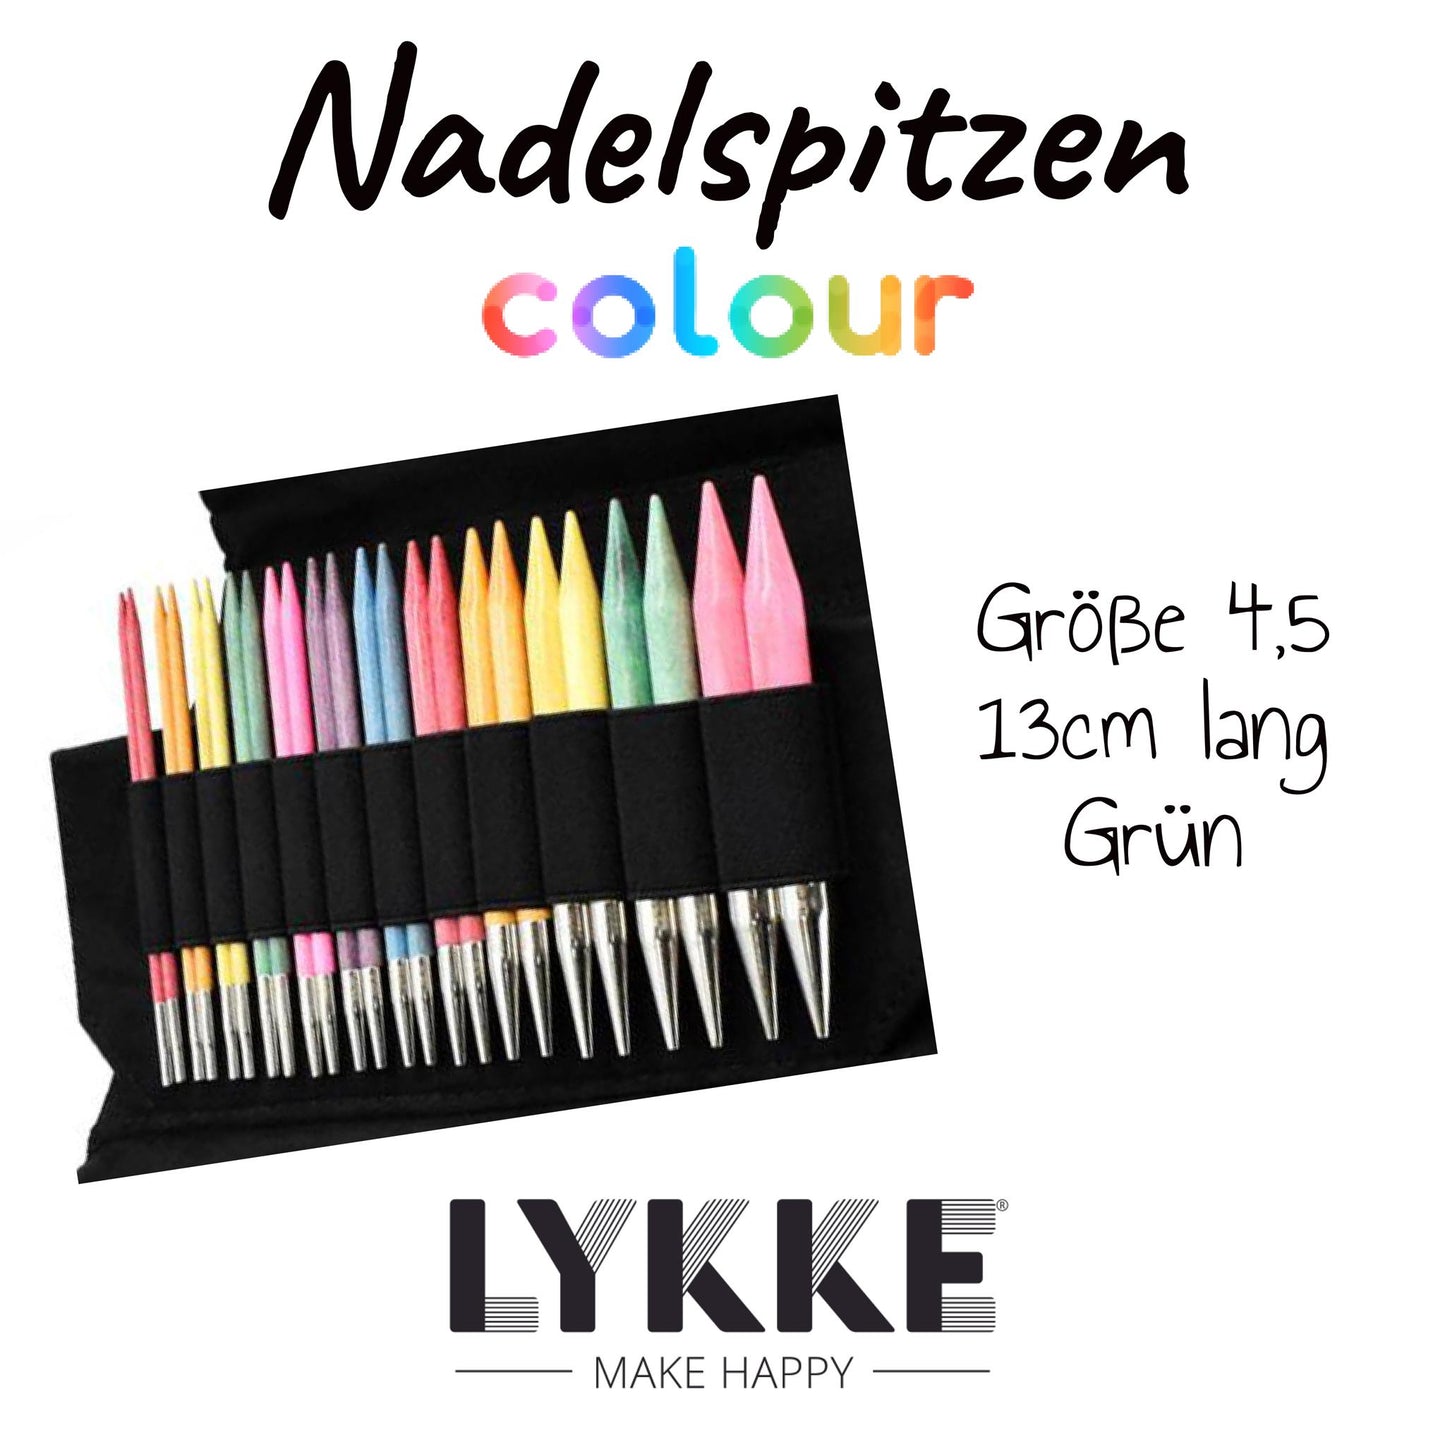 Lykke Stricknadelspitze Colour, 4,5, Birkenholz farbig, 15005200